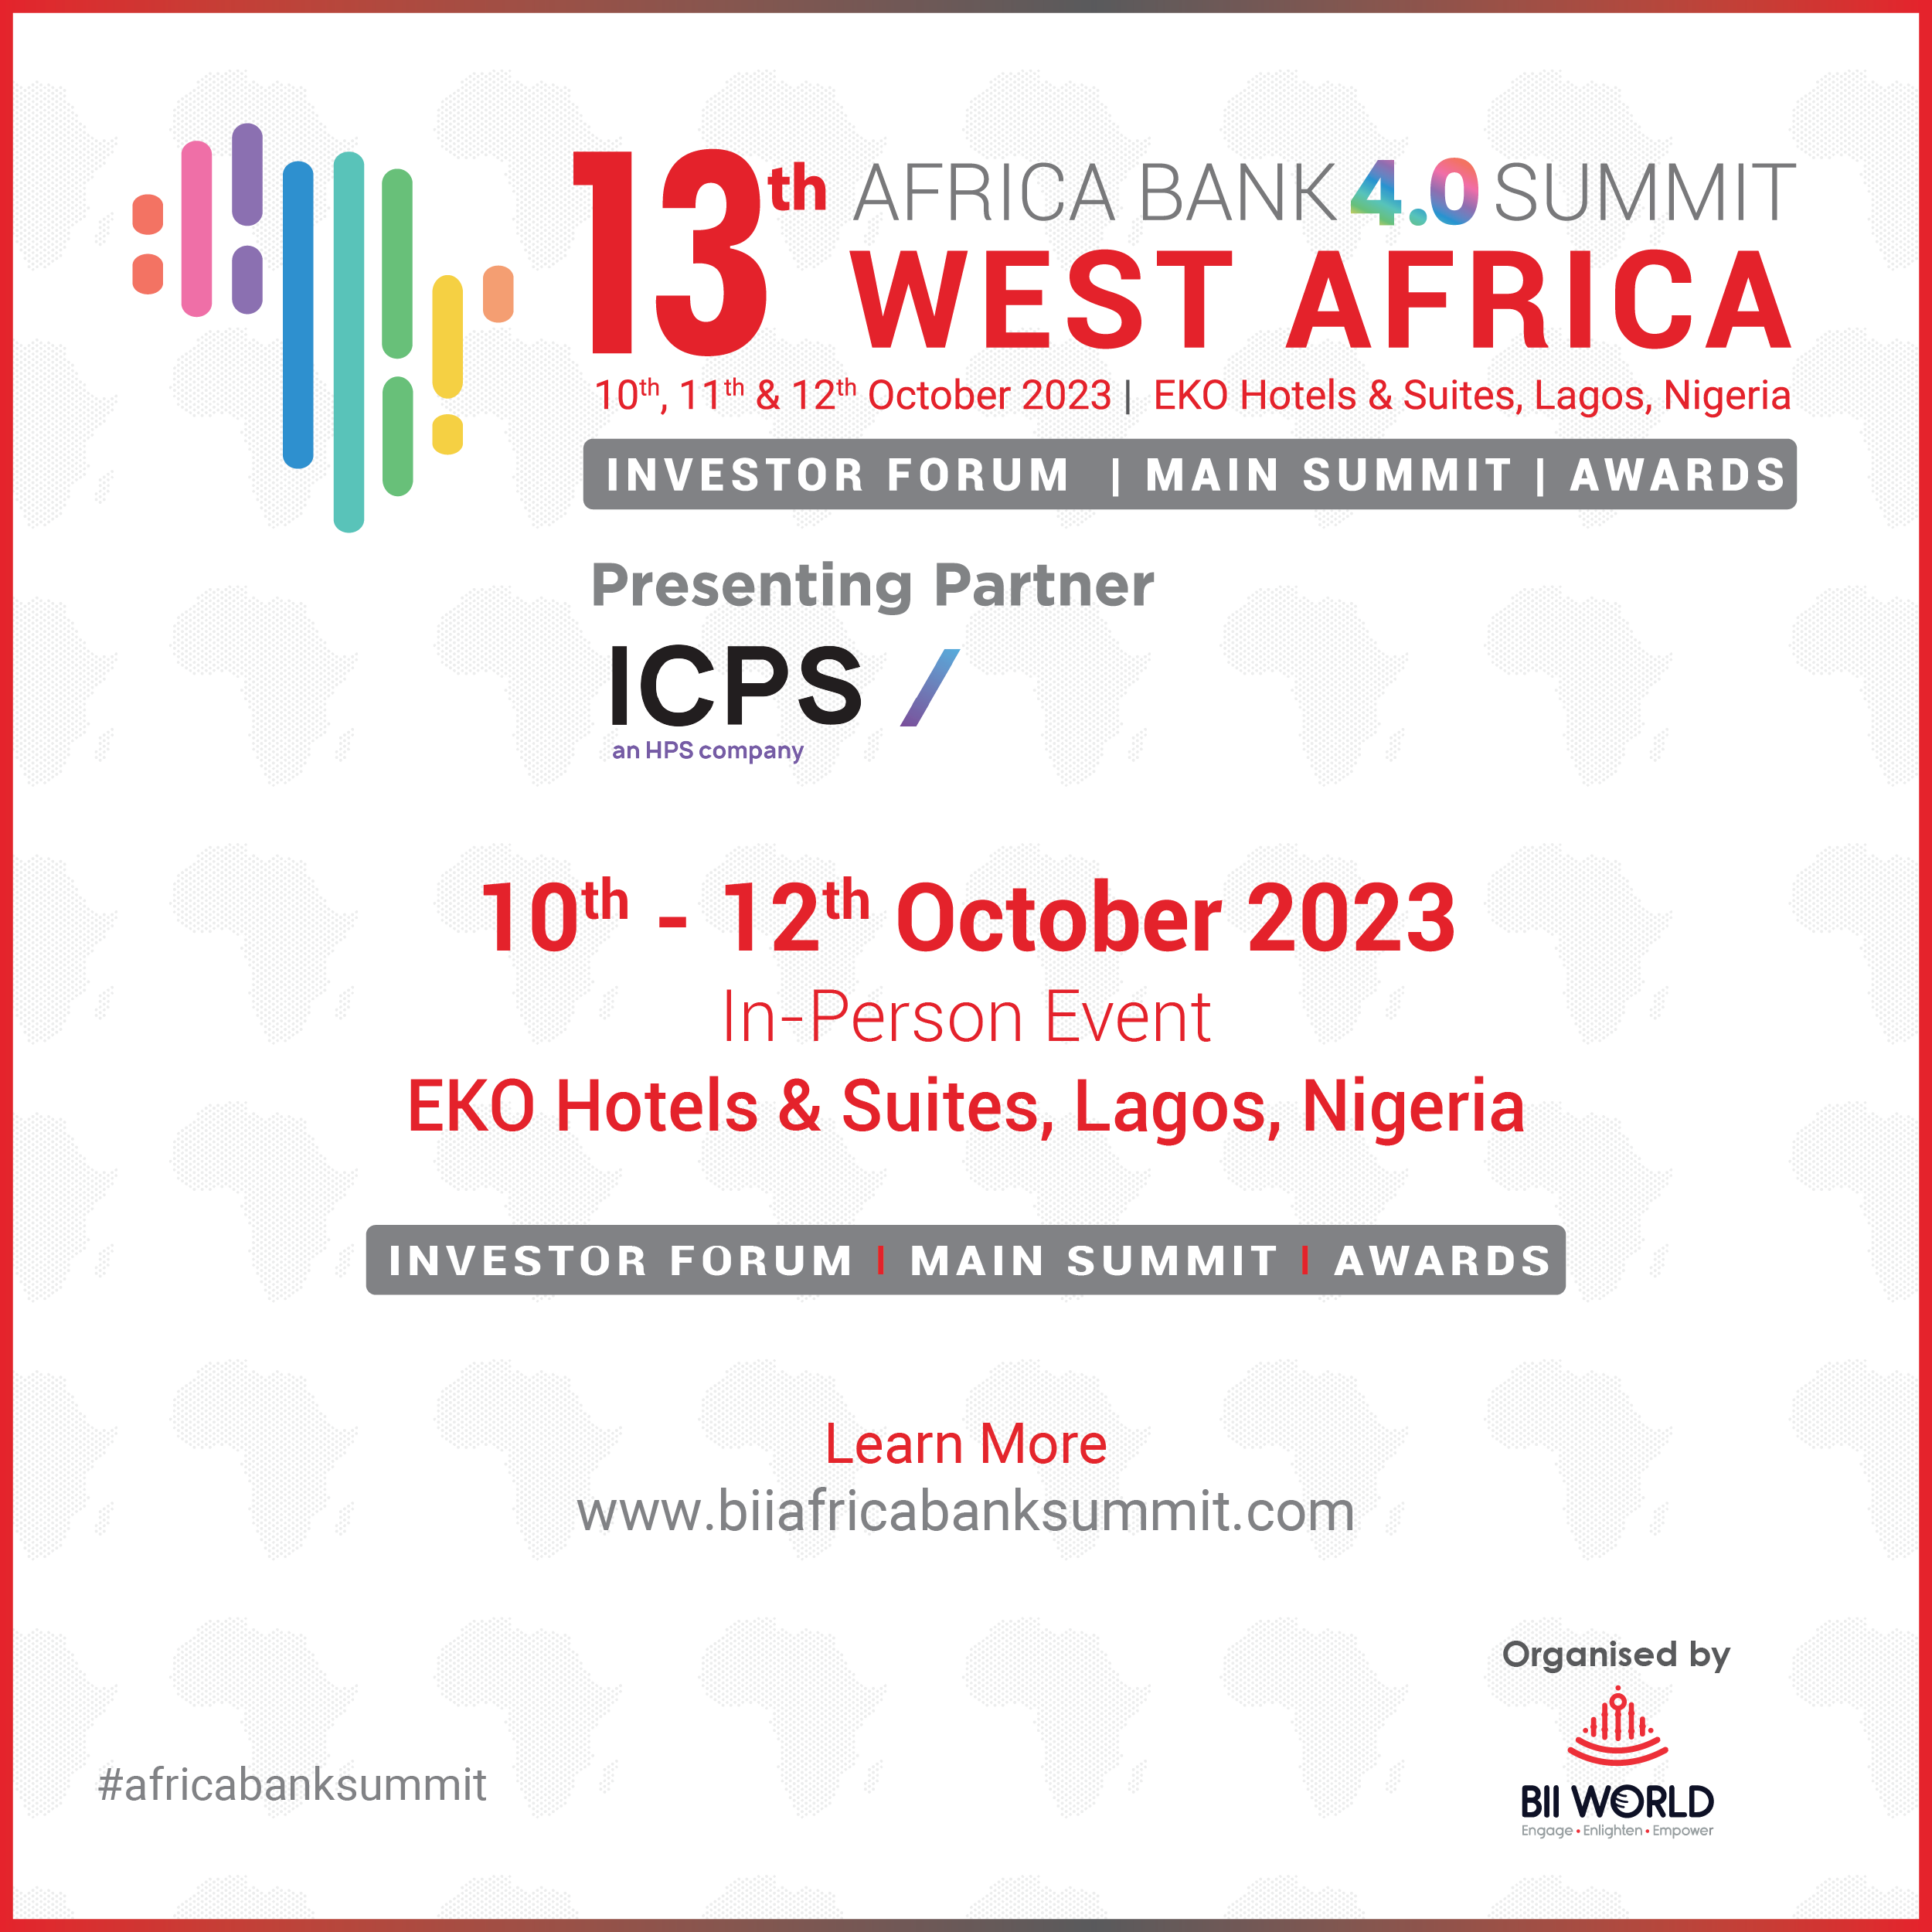 13th Africa Bank 4.0 Summit - West Africa organized by BII World